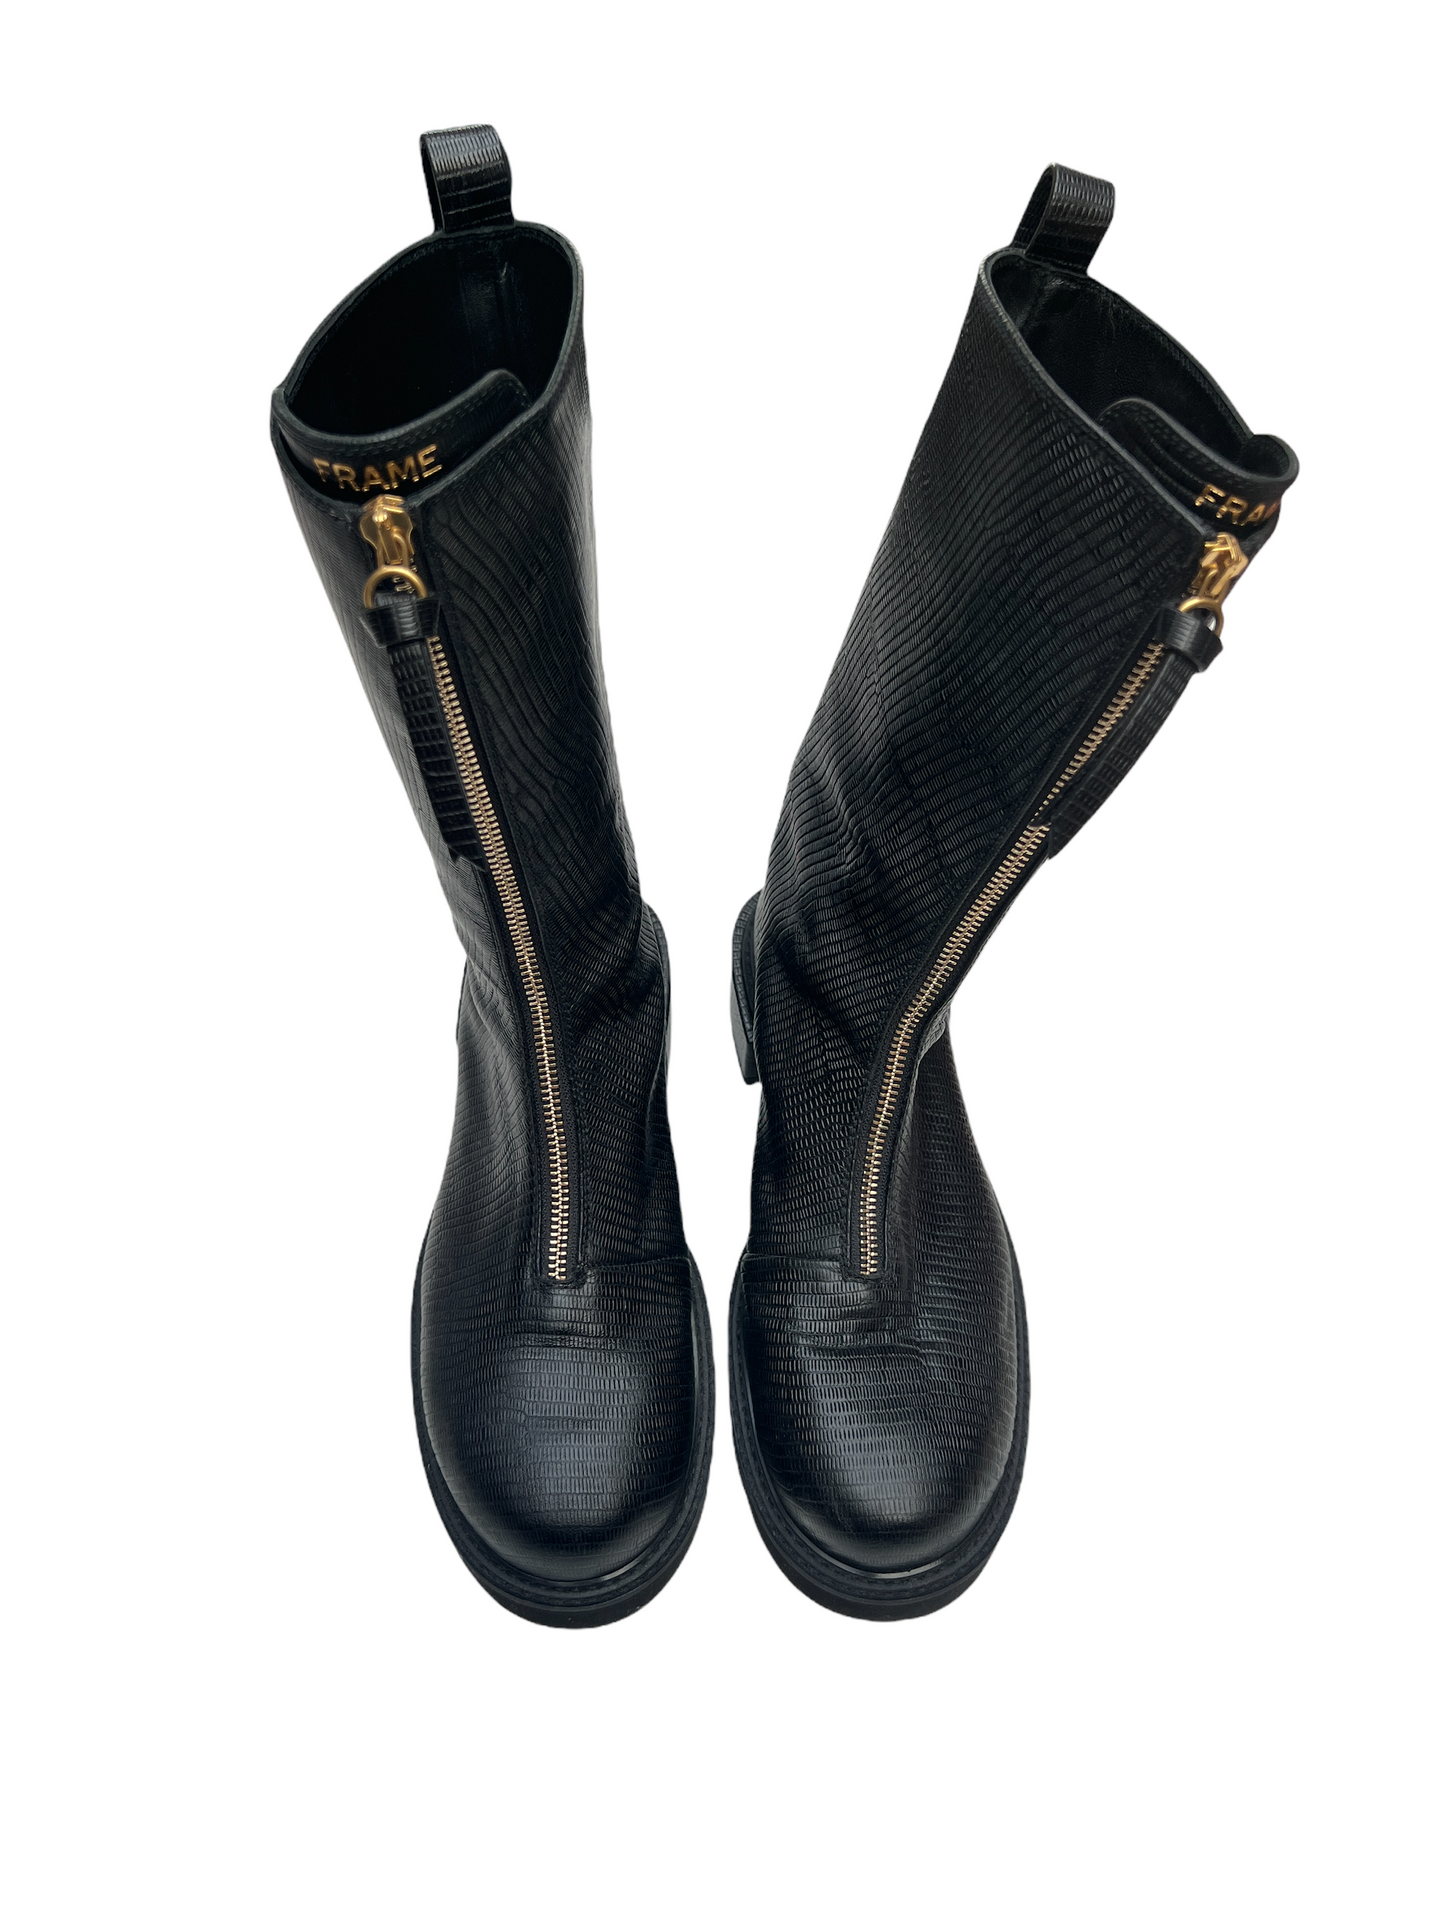 Black Leather Combat Boots - 10